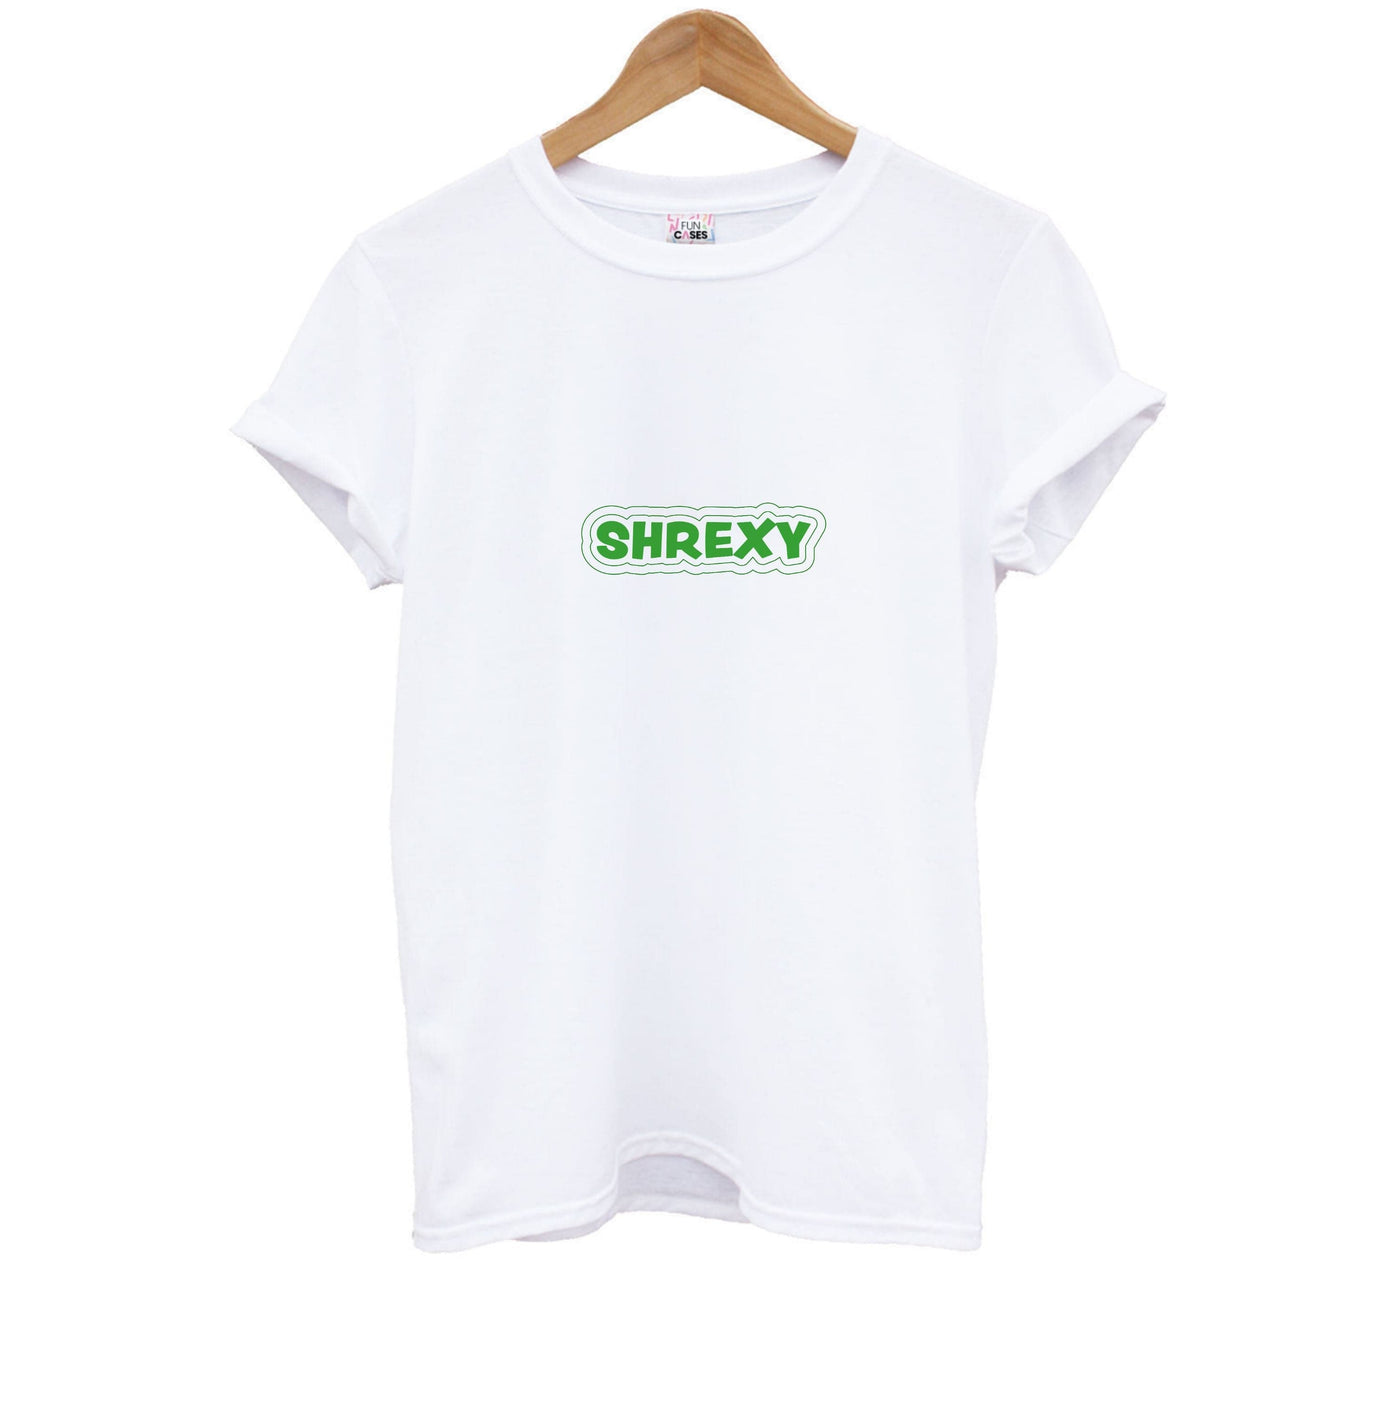 Shrexy Kids T-Shirt